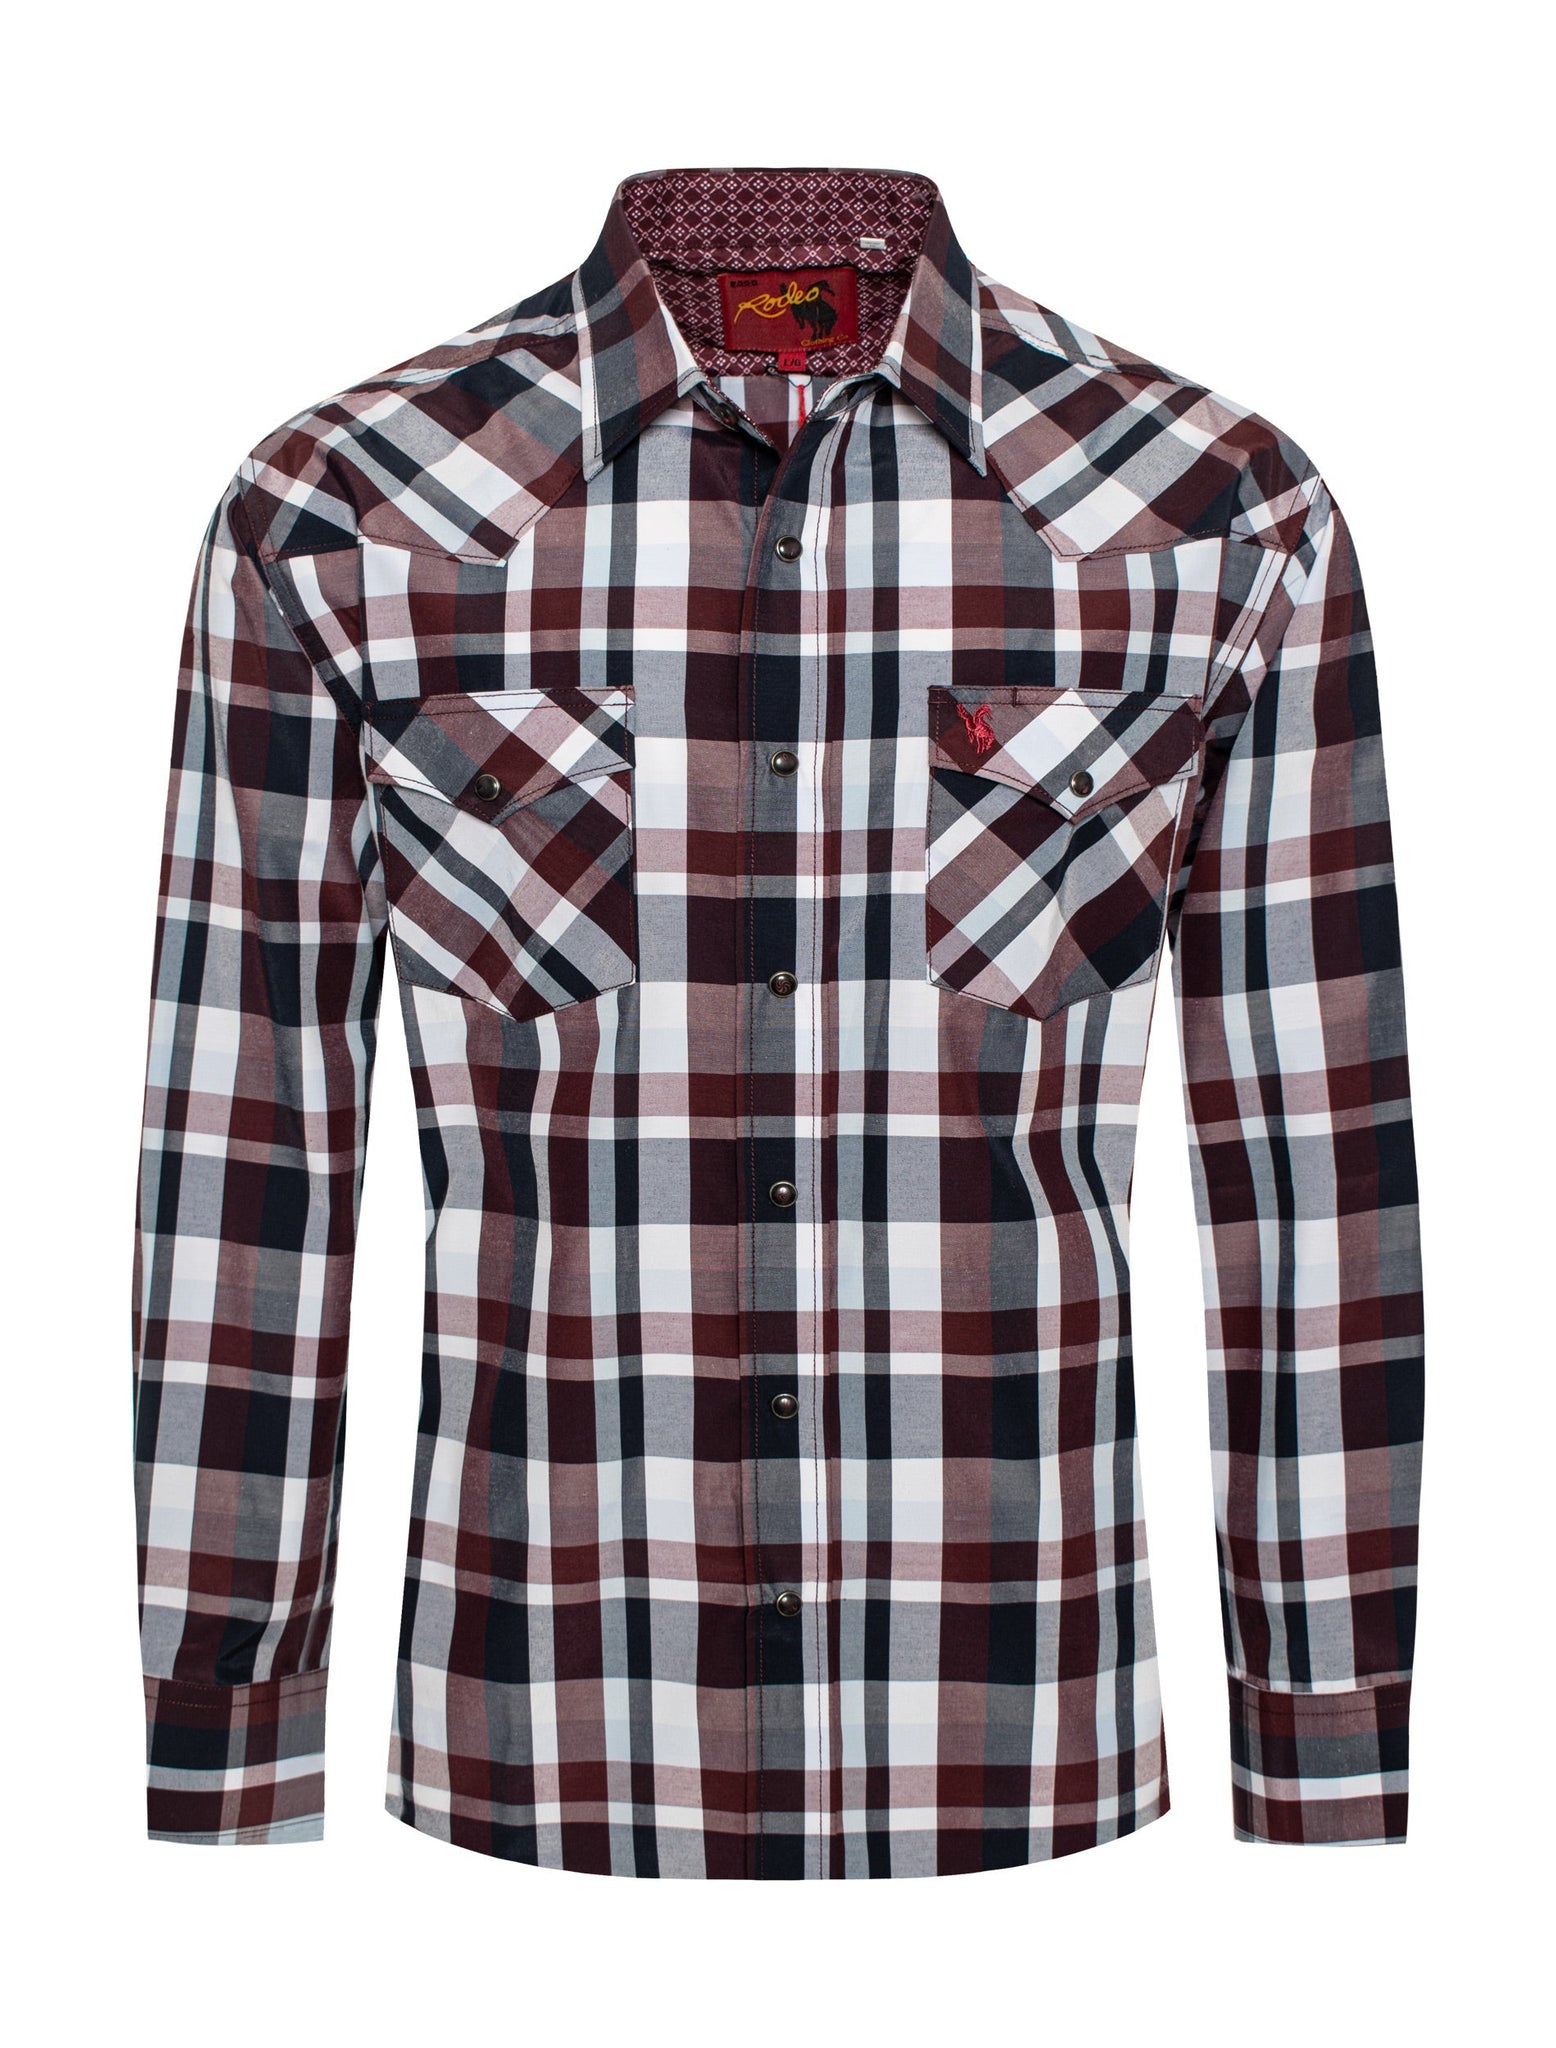 Men's Western Long Sleeve Pearl Snap Plaid Shirt -PS400-416